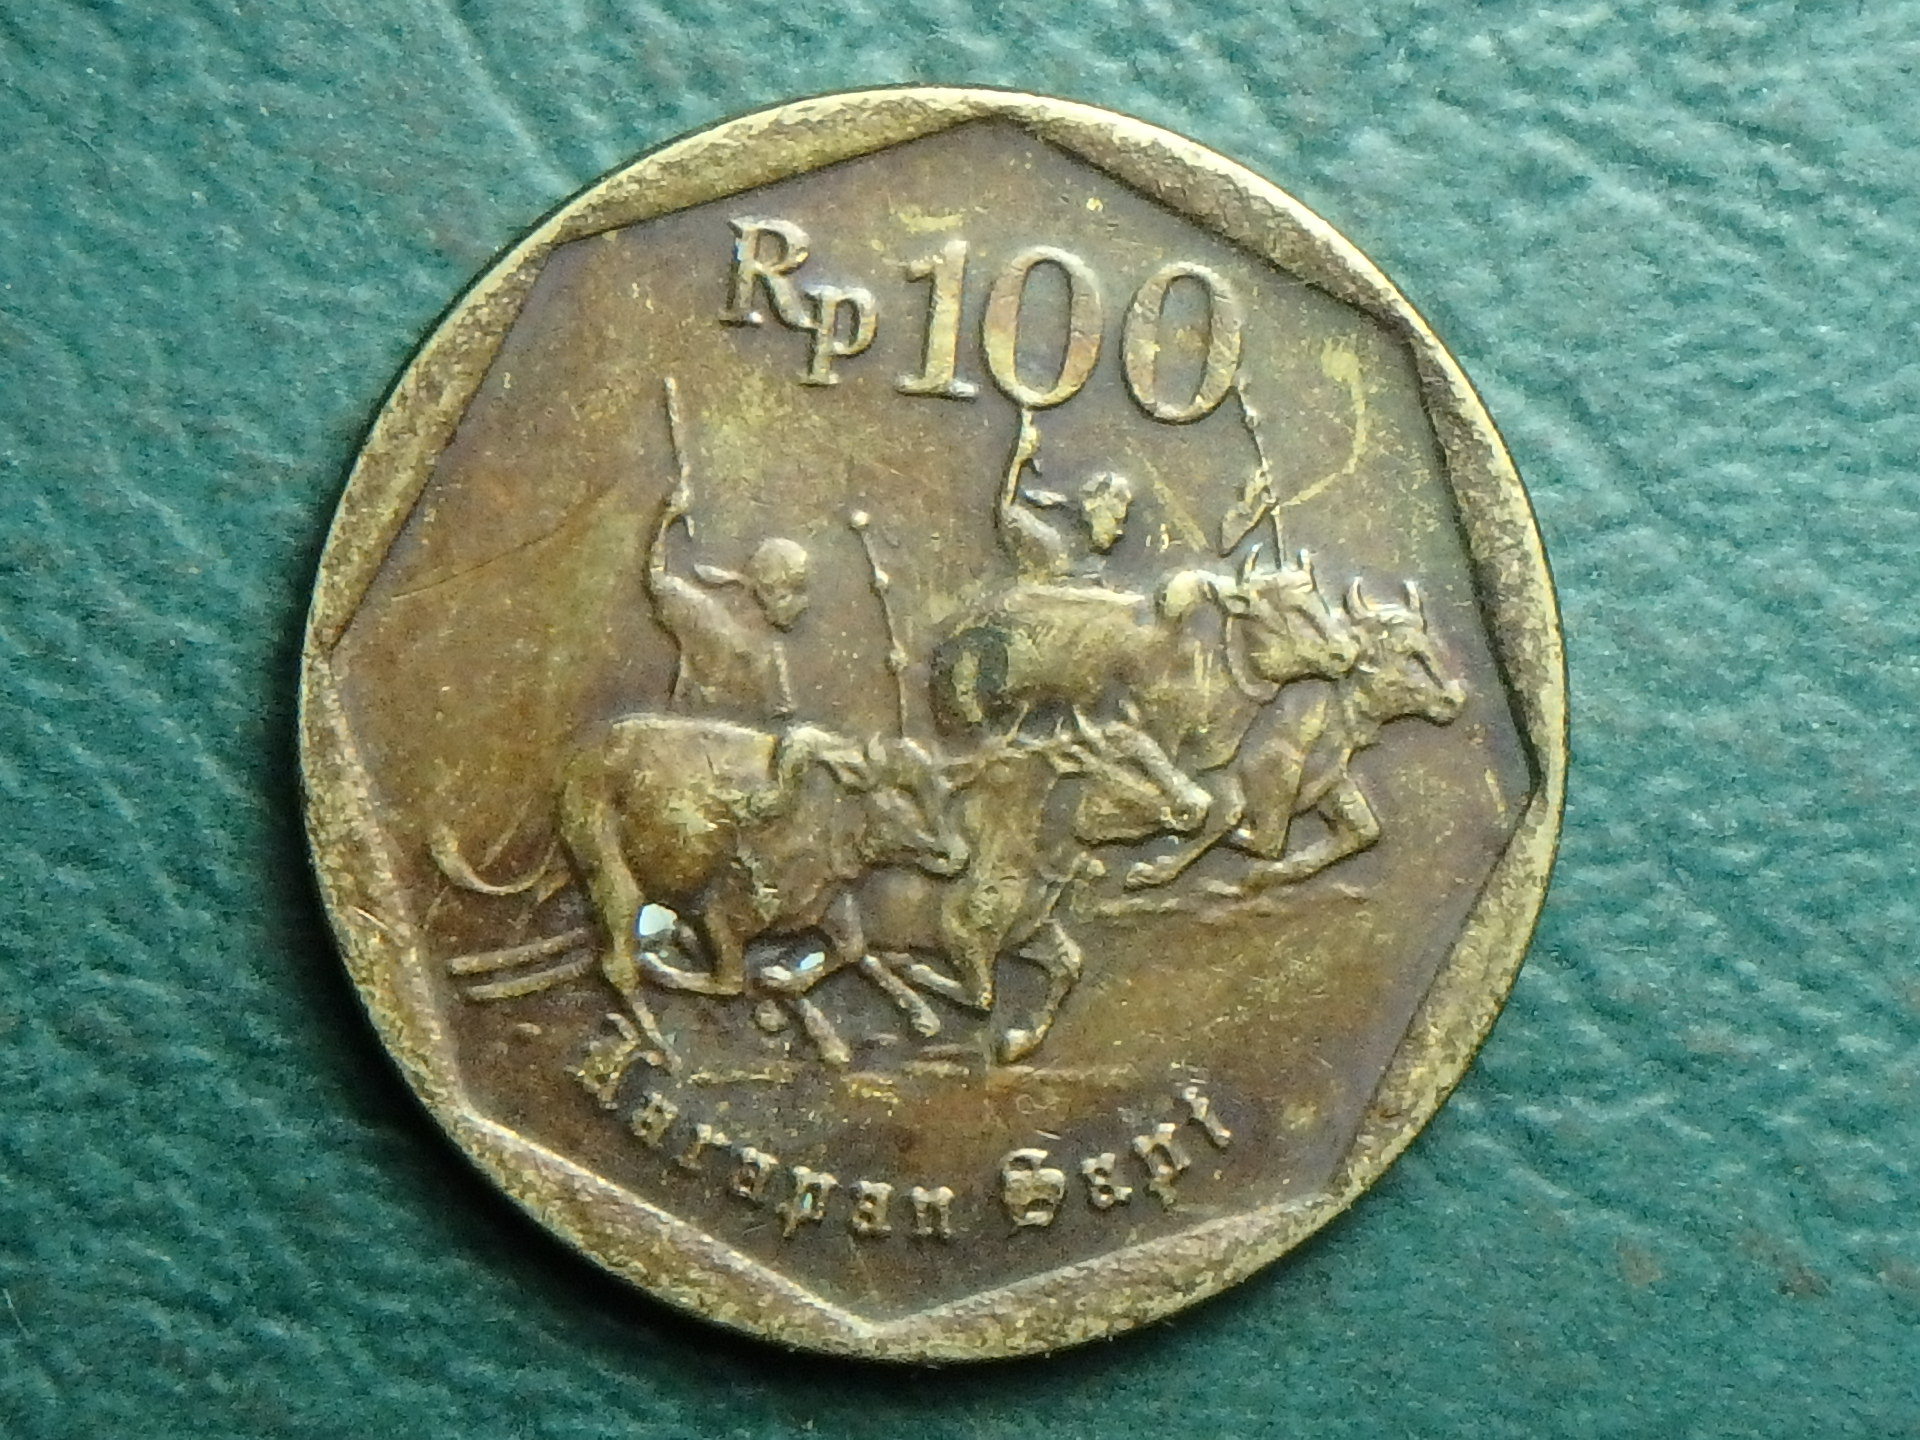 1995 INDO 100 r rev (2).JPG